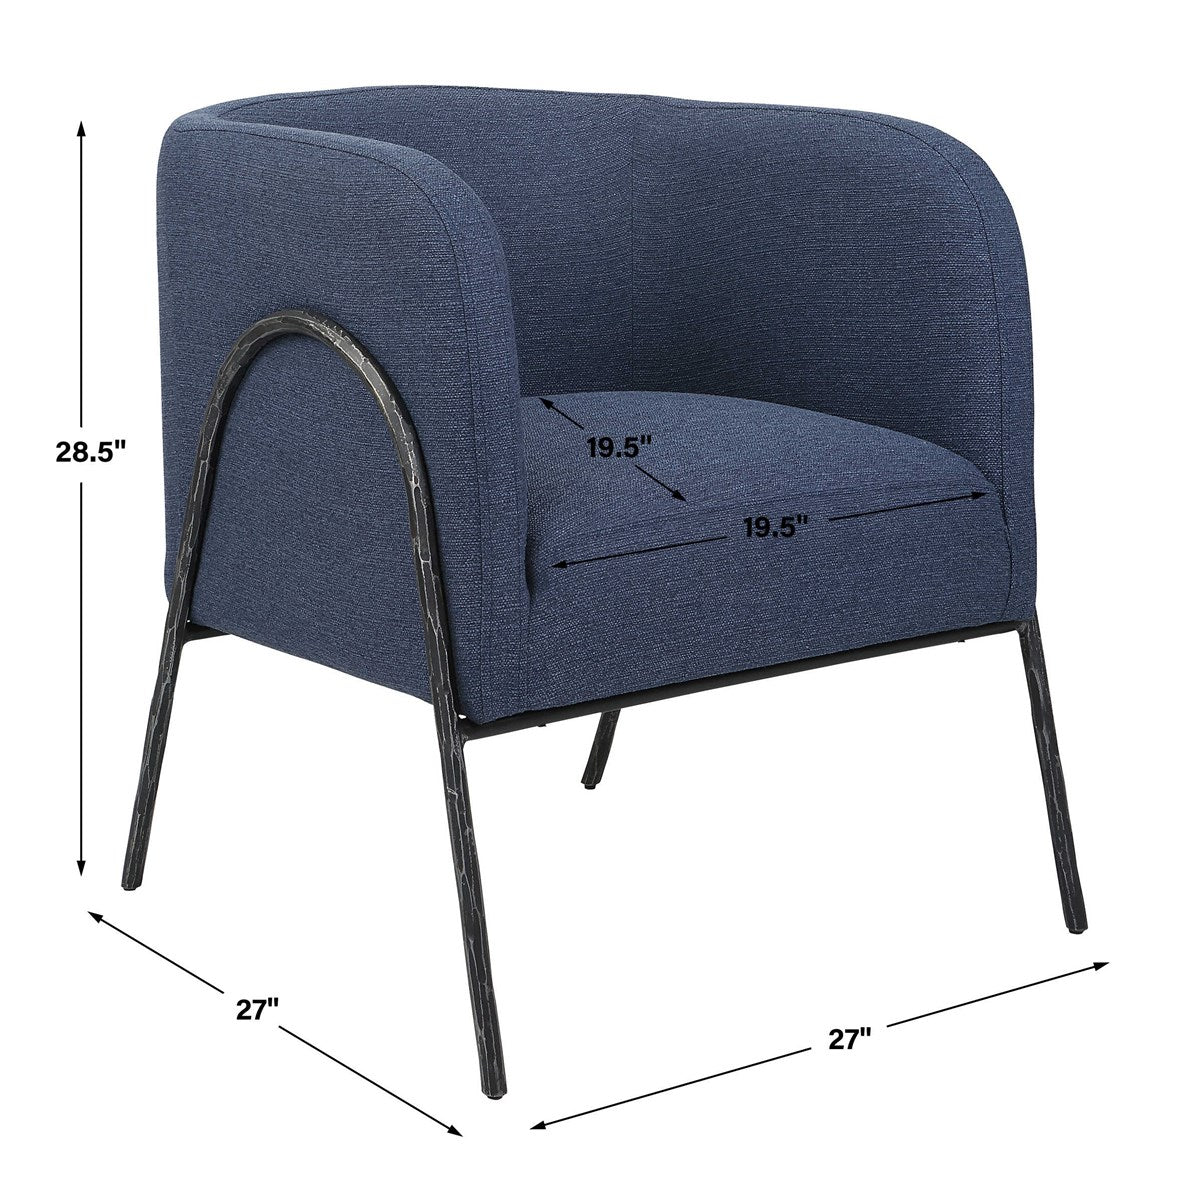 Jacobsen Accent Chair, Denim